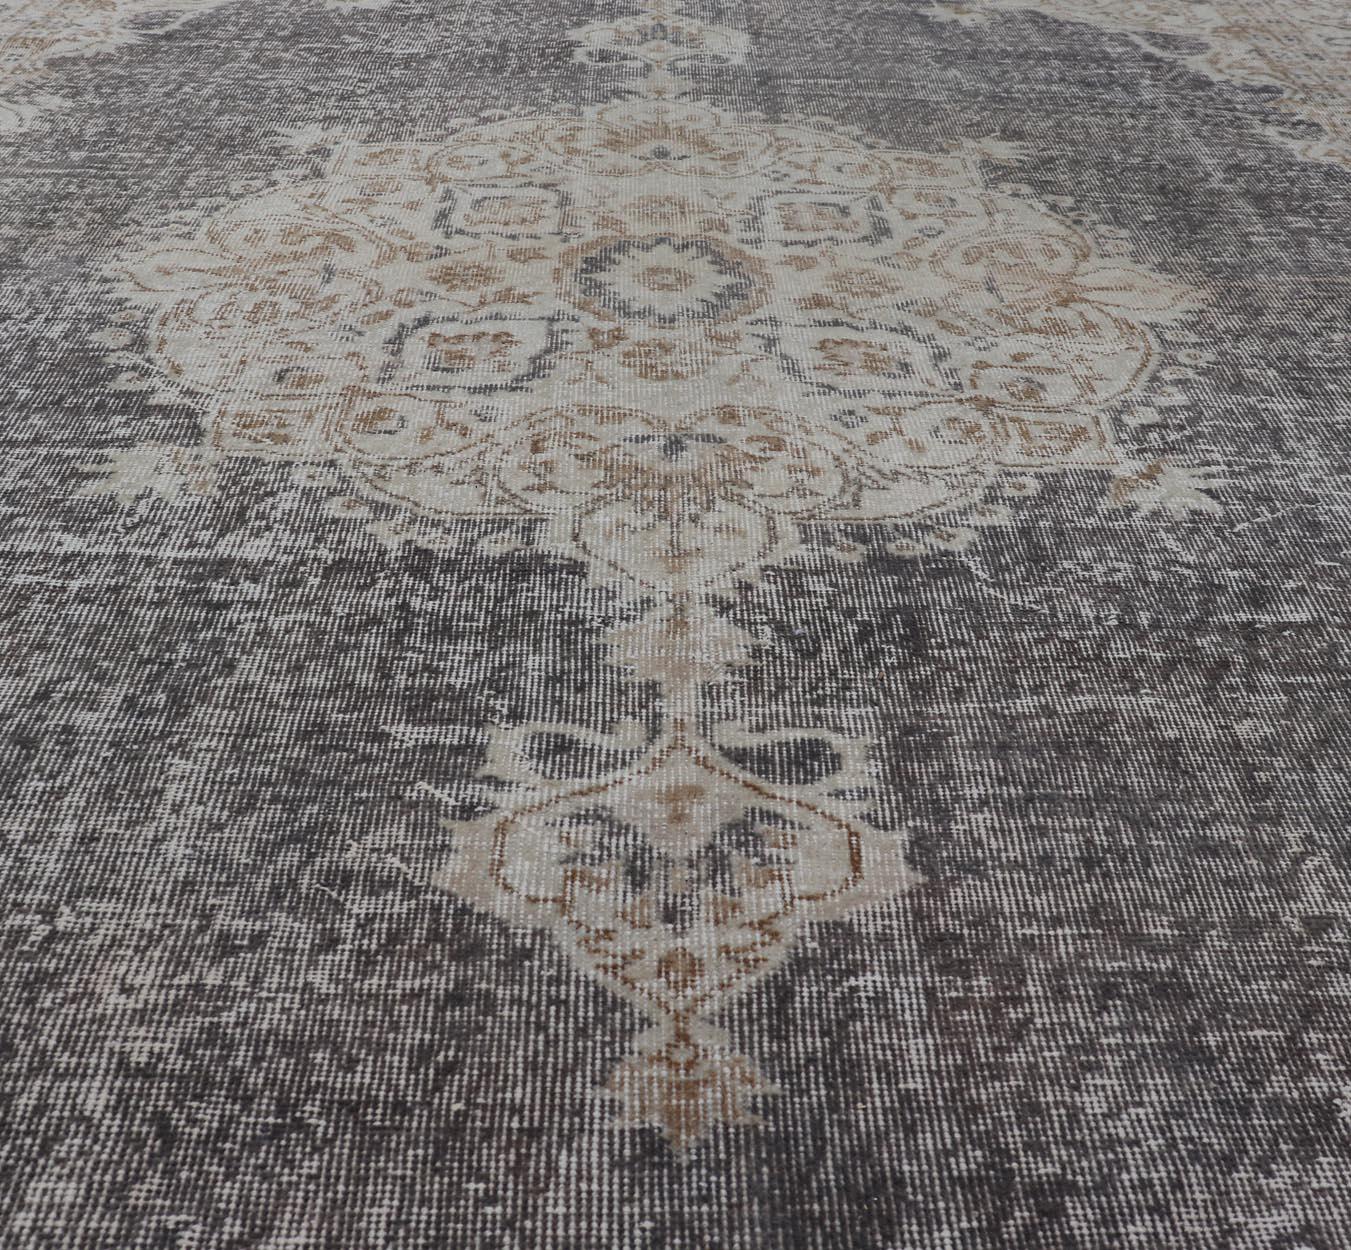 Distressed Turkish Carpet with medallion Design in Dark Gray, Lt. Brown & Cream For Sale 4